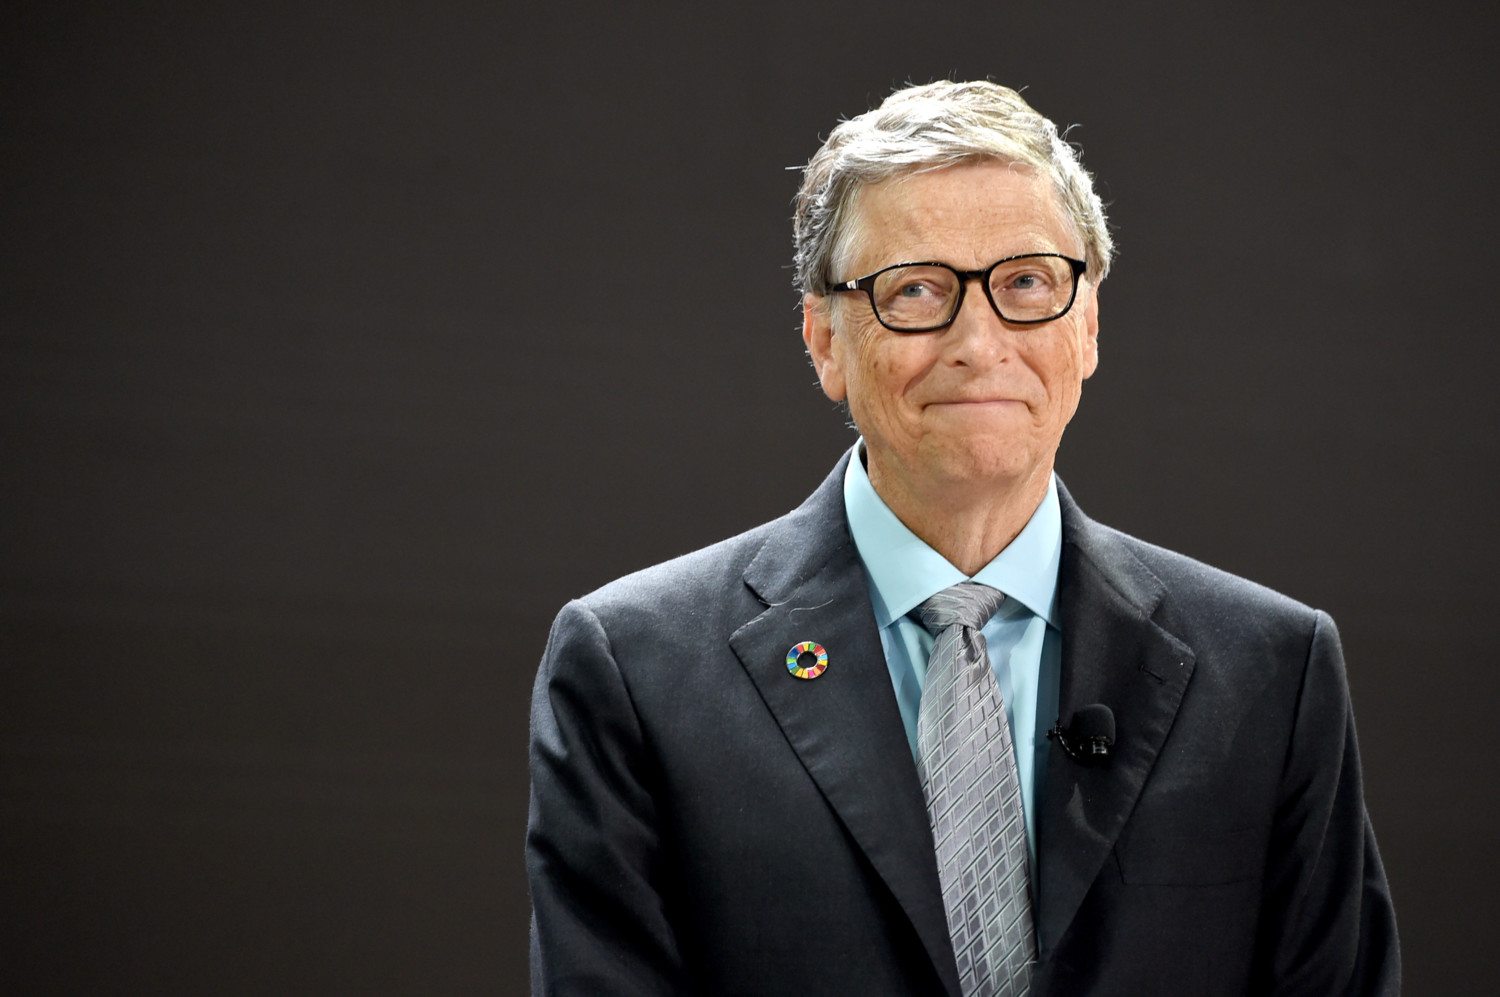 Bill Gates photo